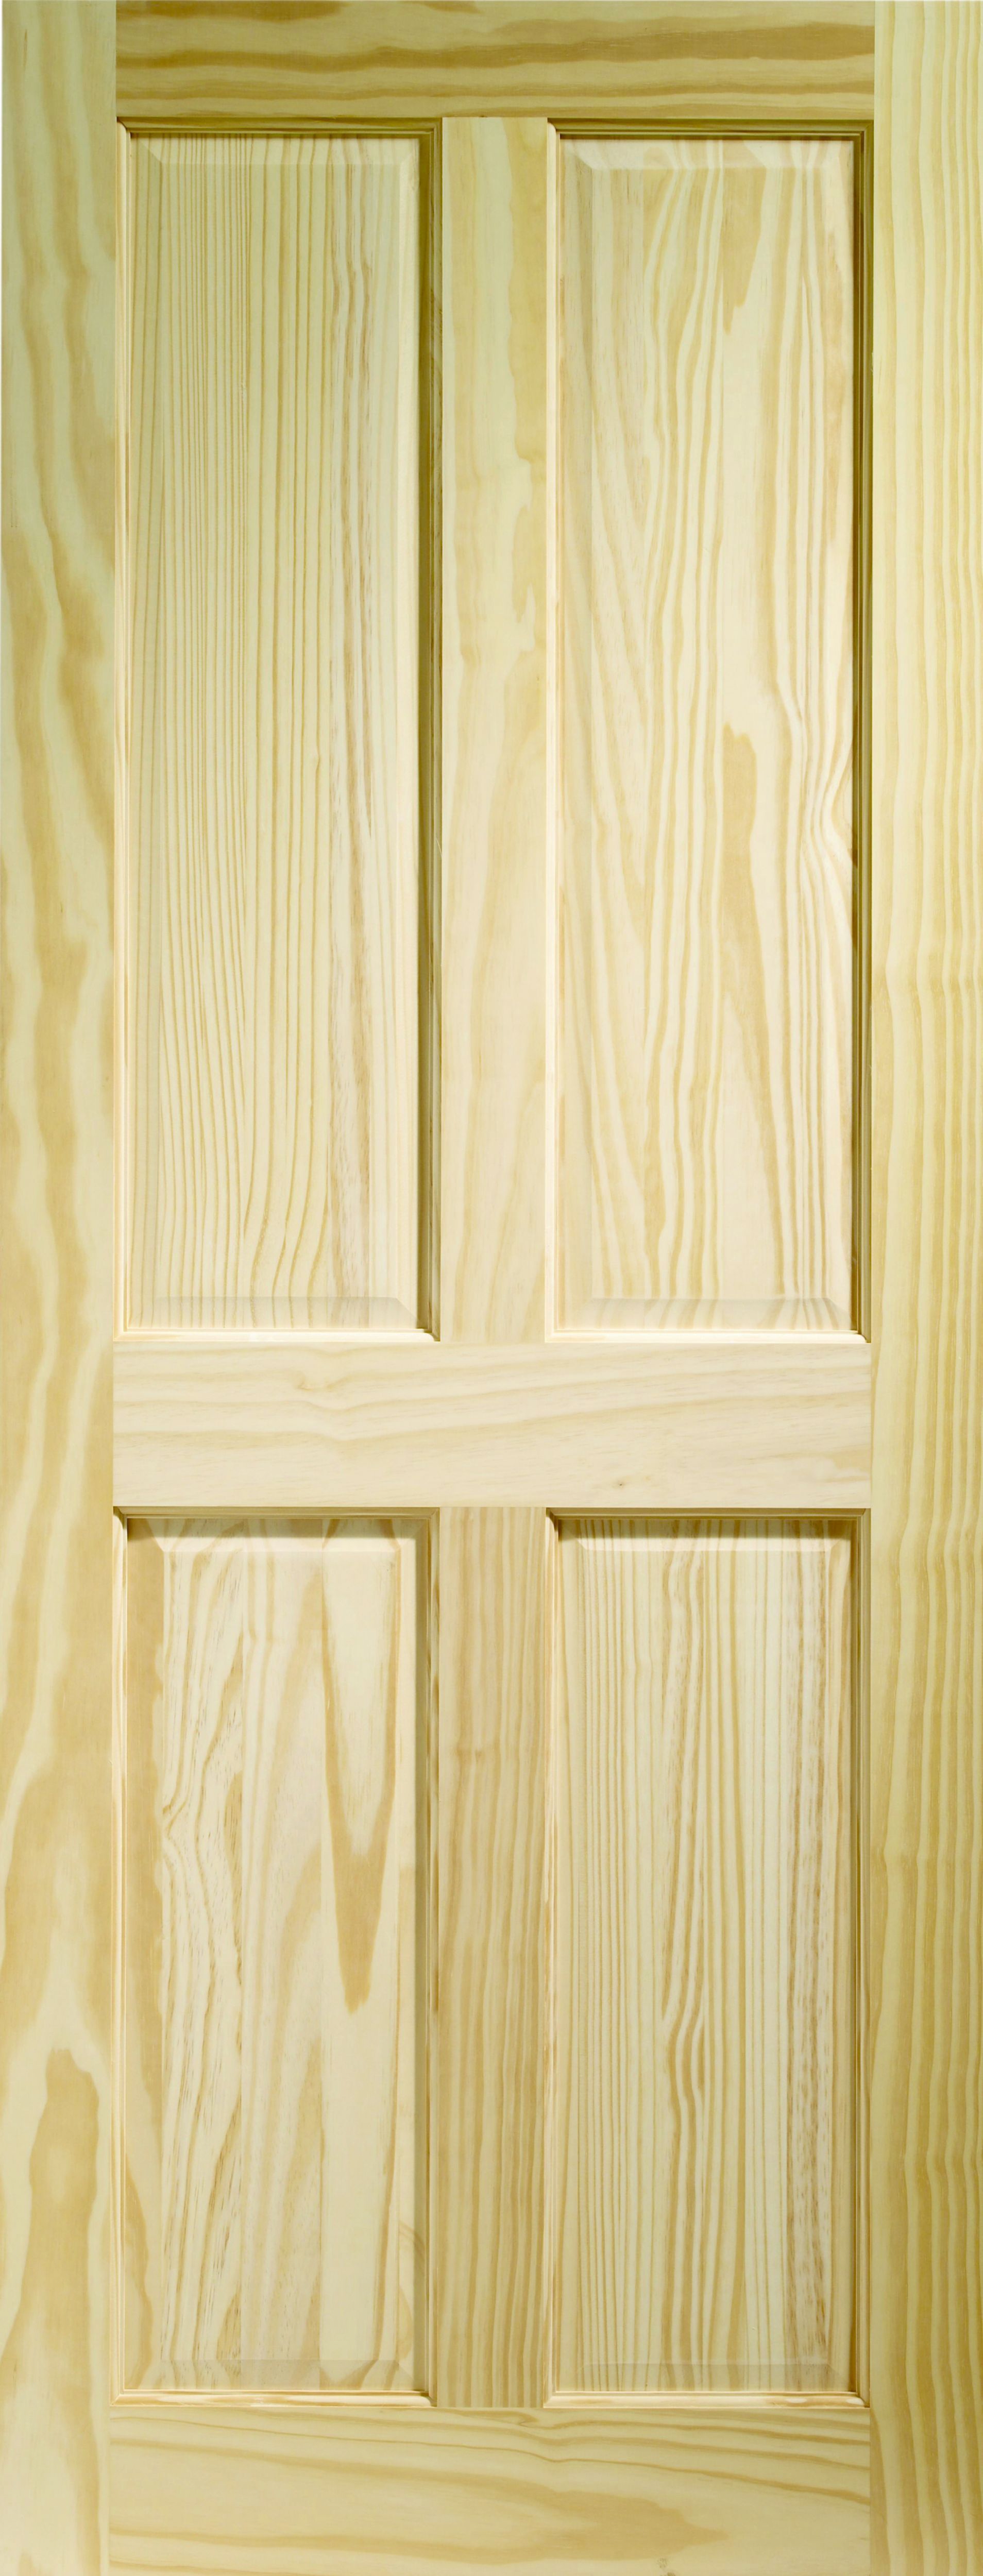 Wickes Skipton Clear Pine 4 Panel FD30 Internal Fire Door - 1981 x 686mm